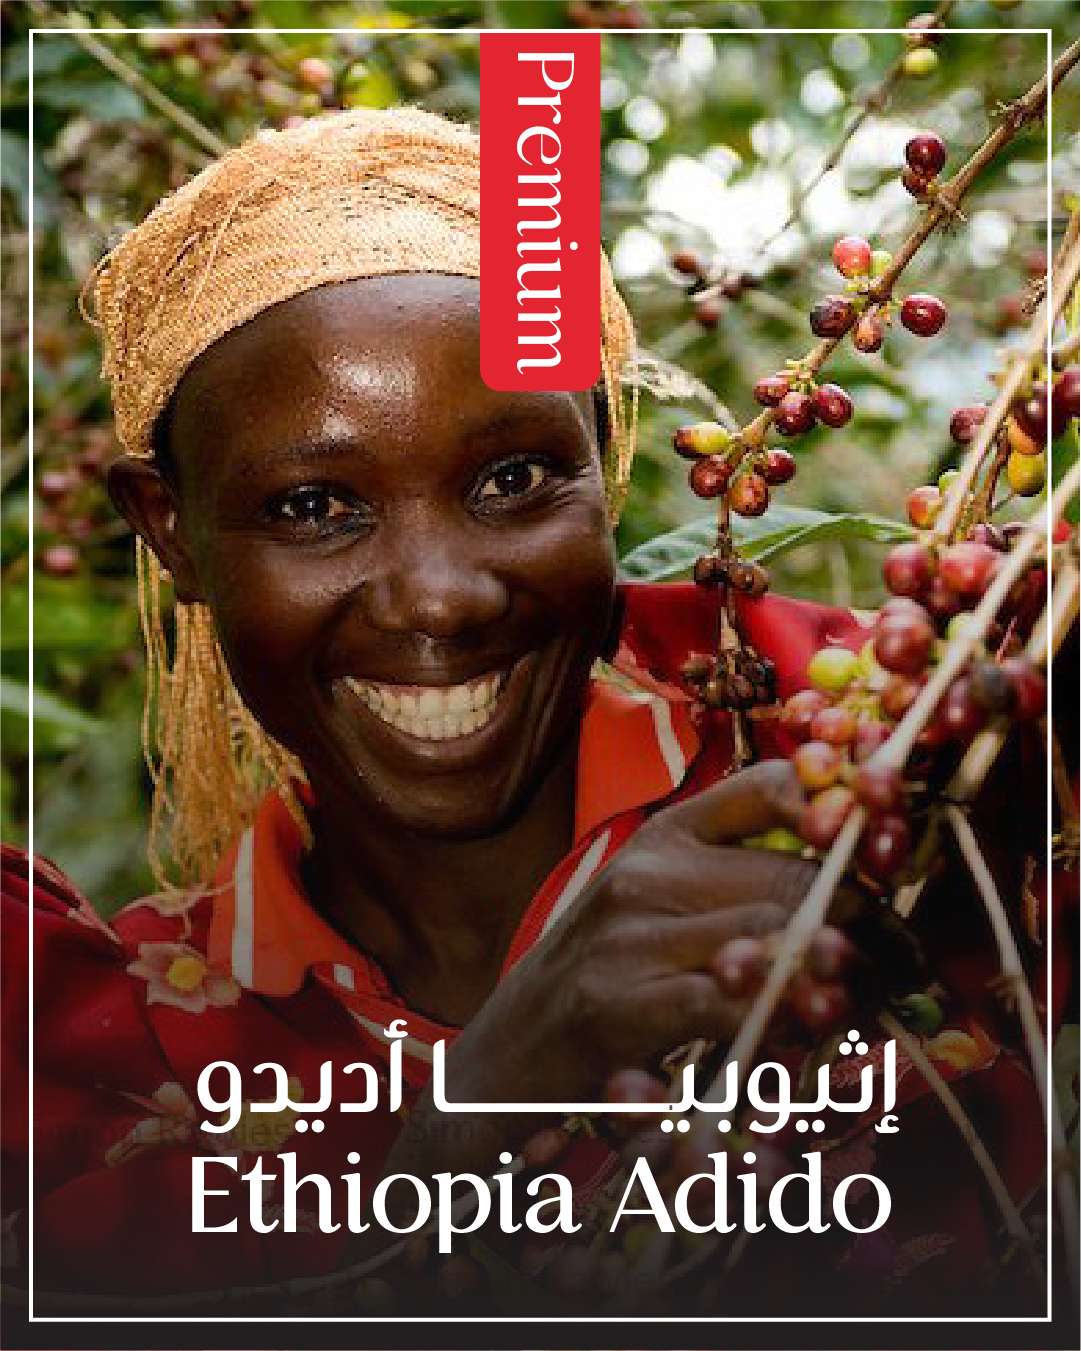 Ethiopia adido ||  اثيوبيا أديدو